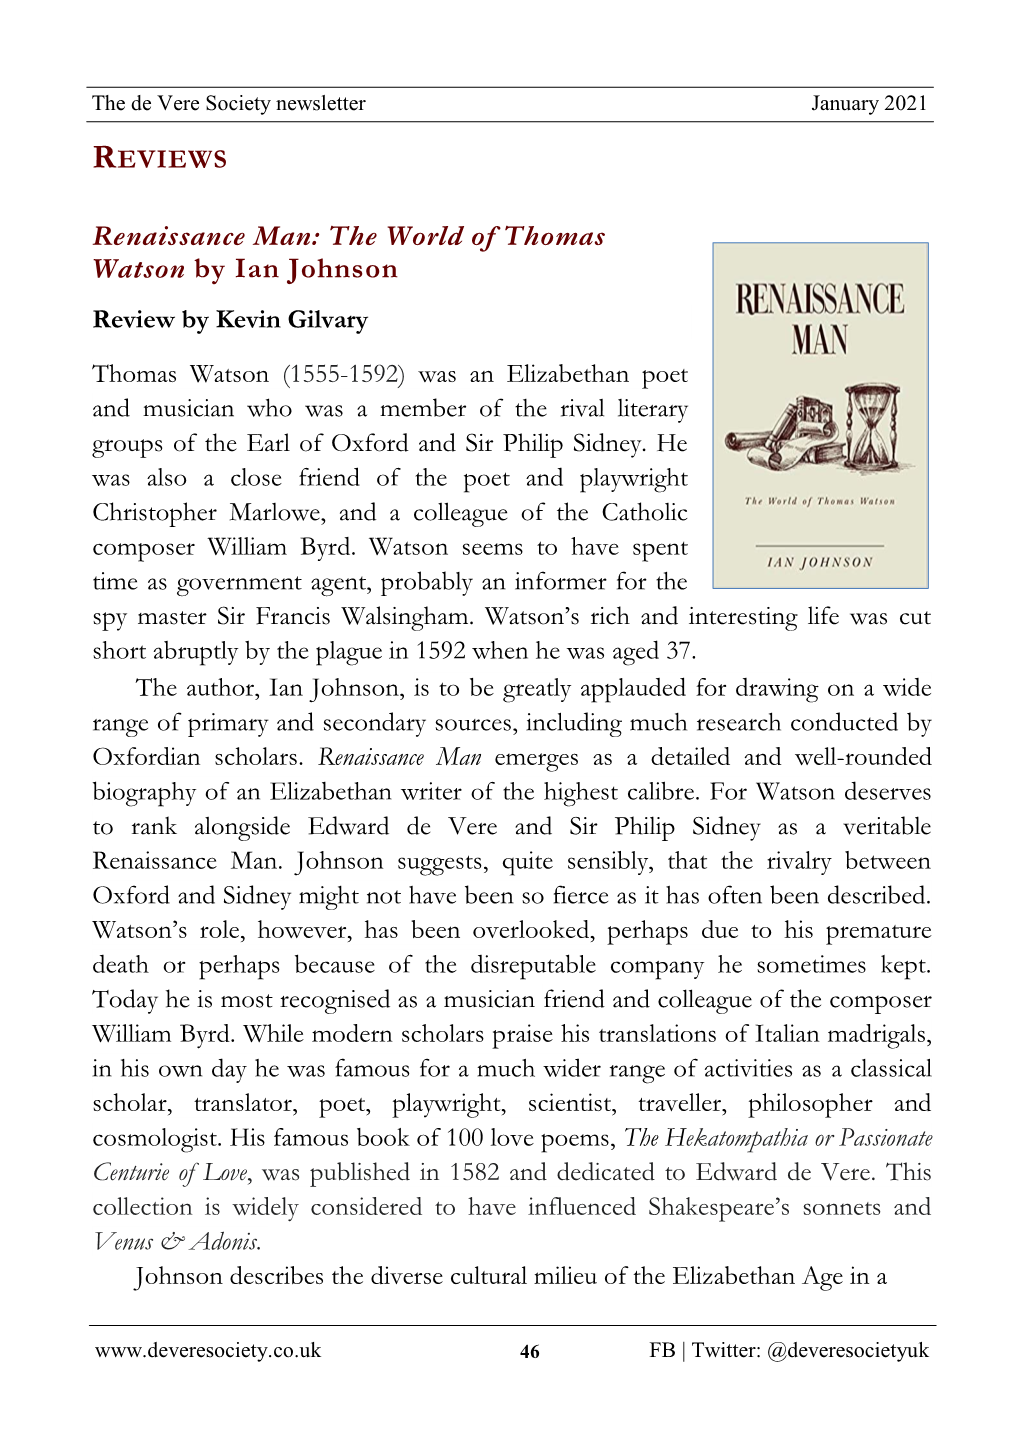 Renaissance Man: the World of Thomas Watson by Ian Johnson Review by Kevin Gilvary